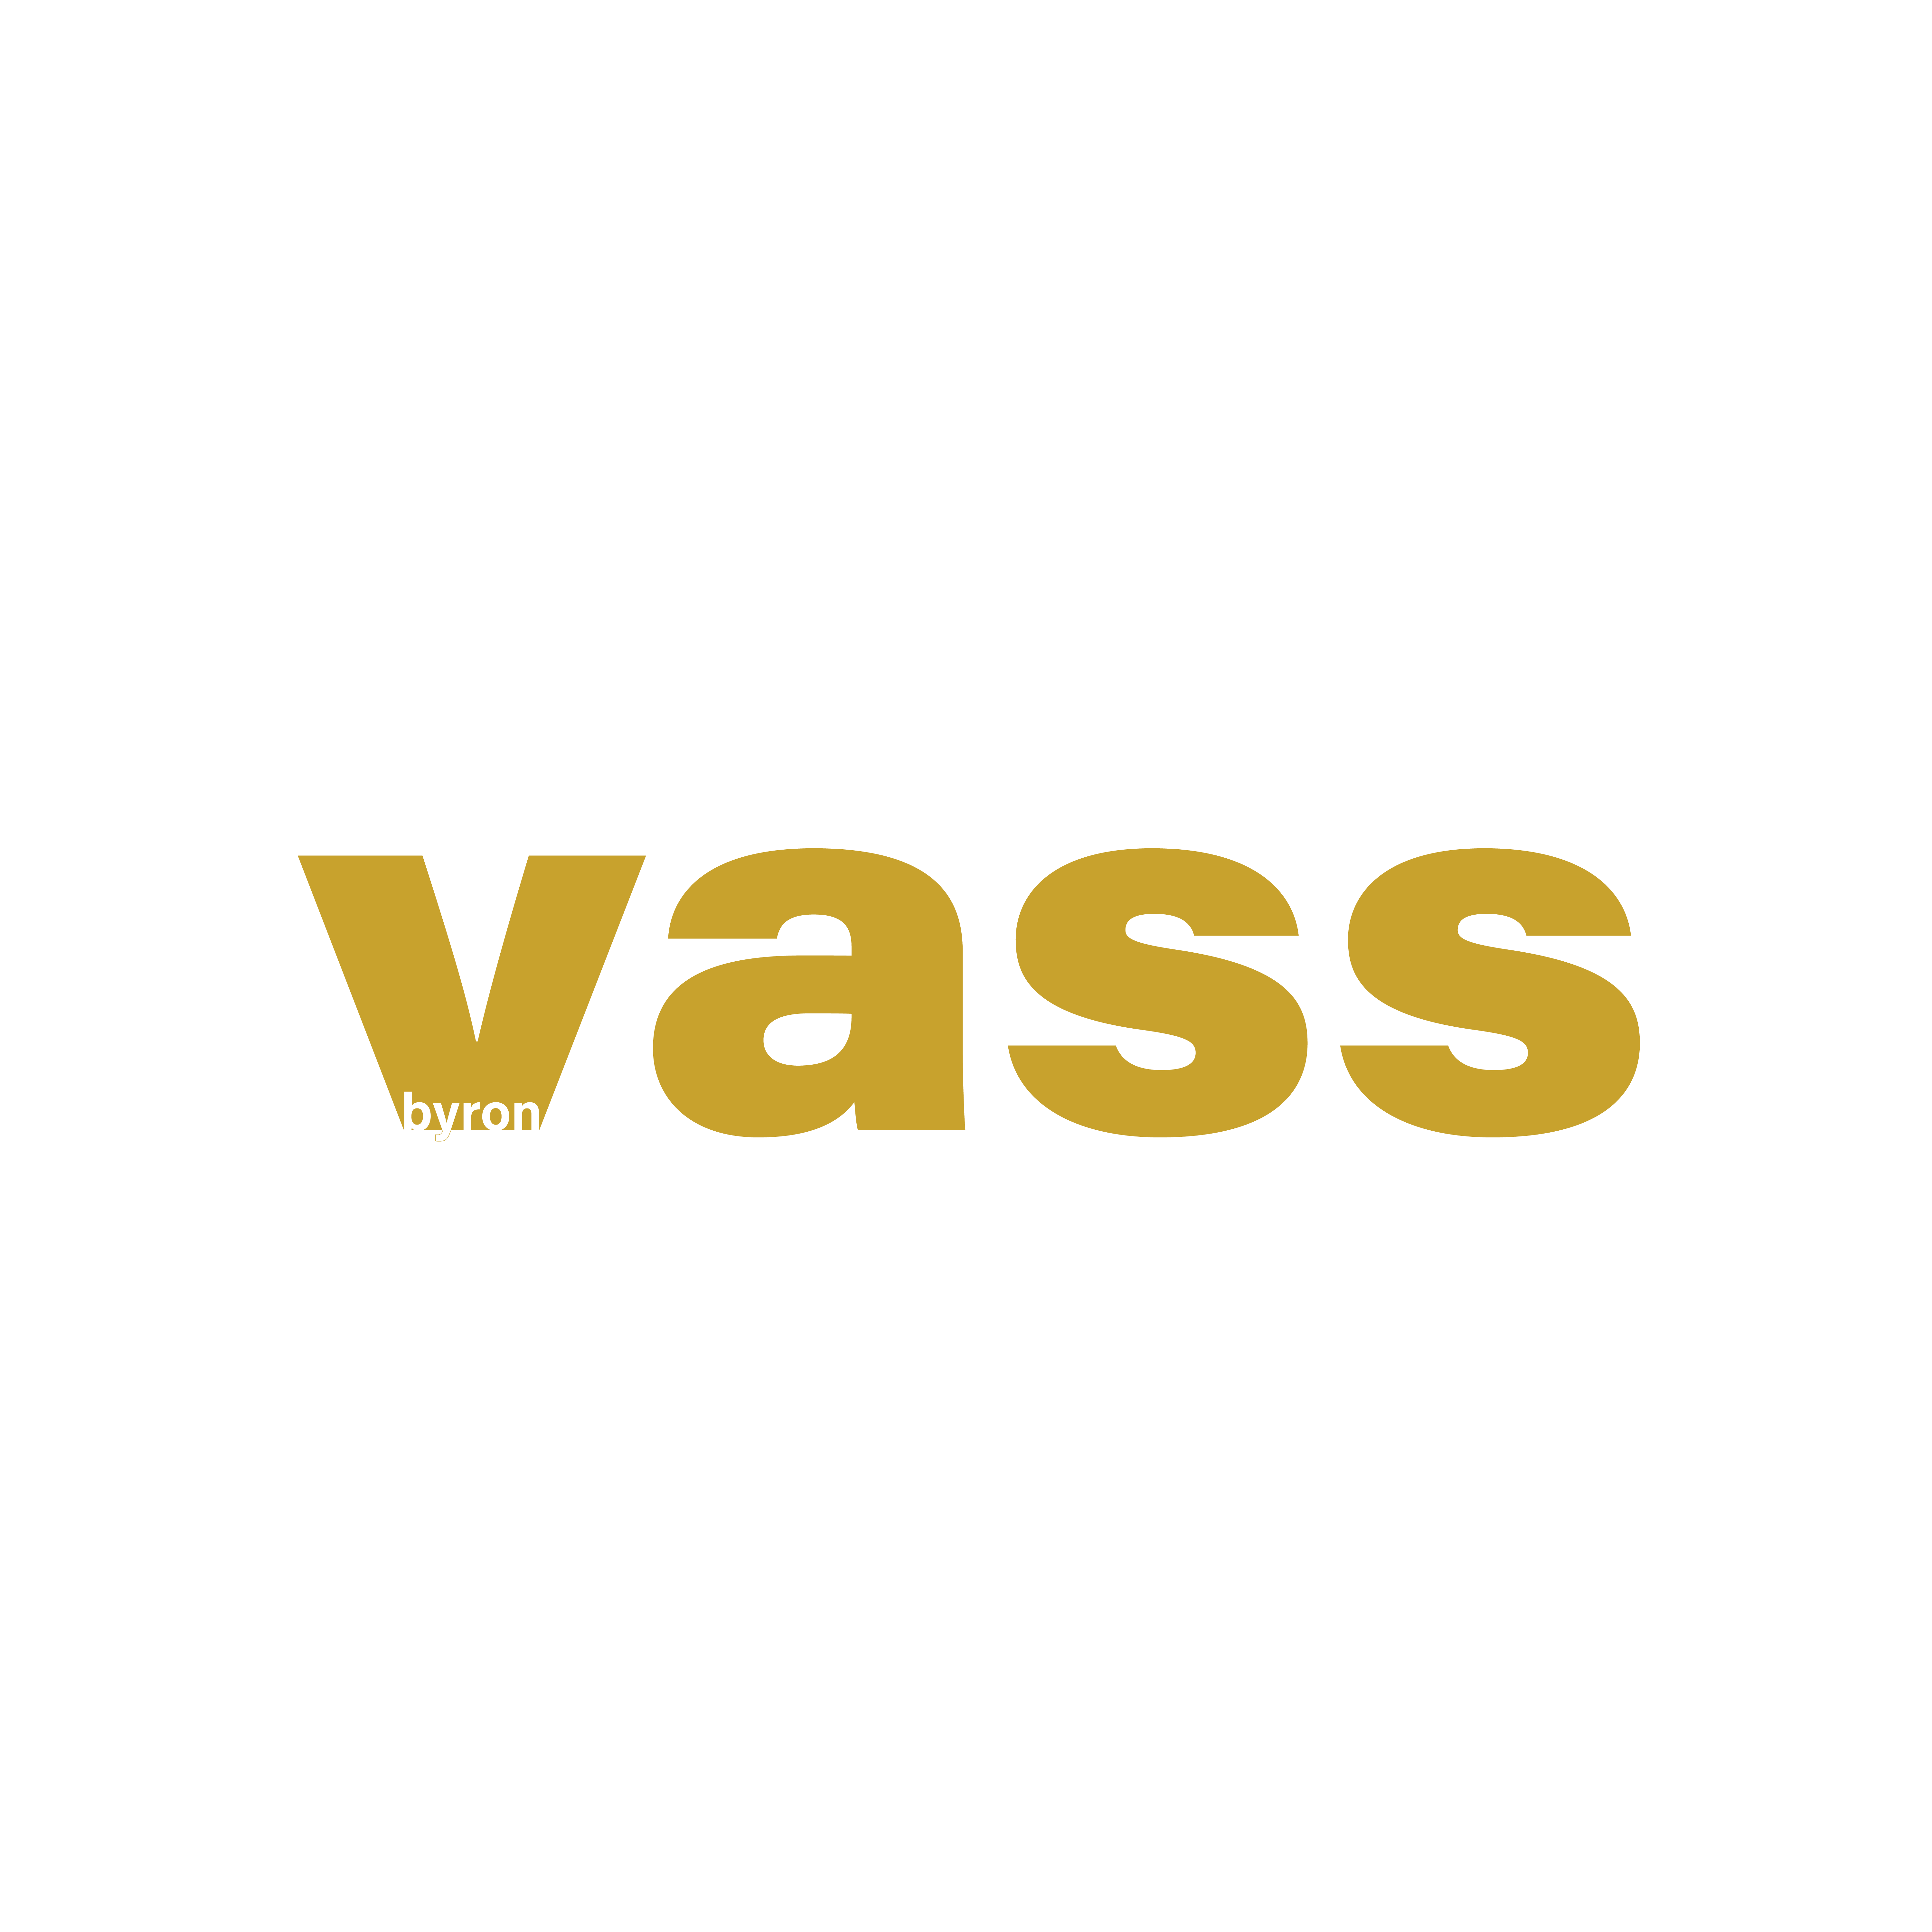 Byron Vass logo